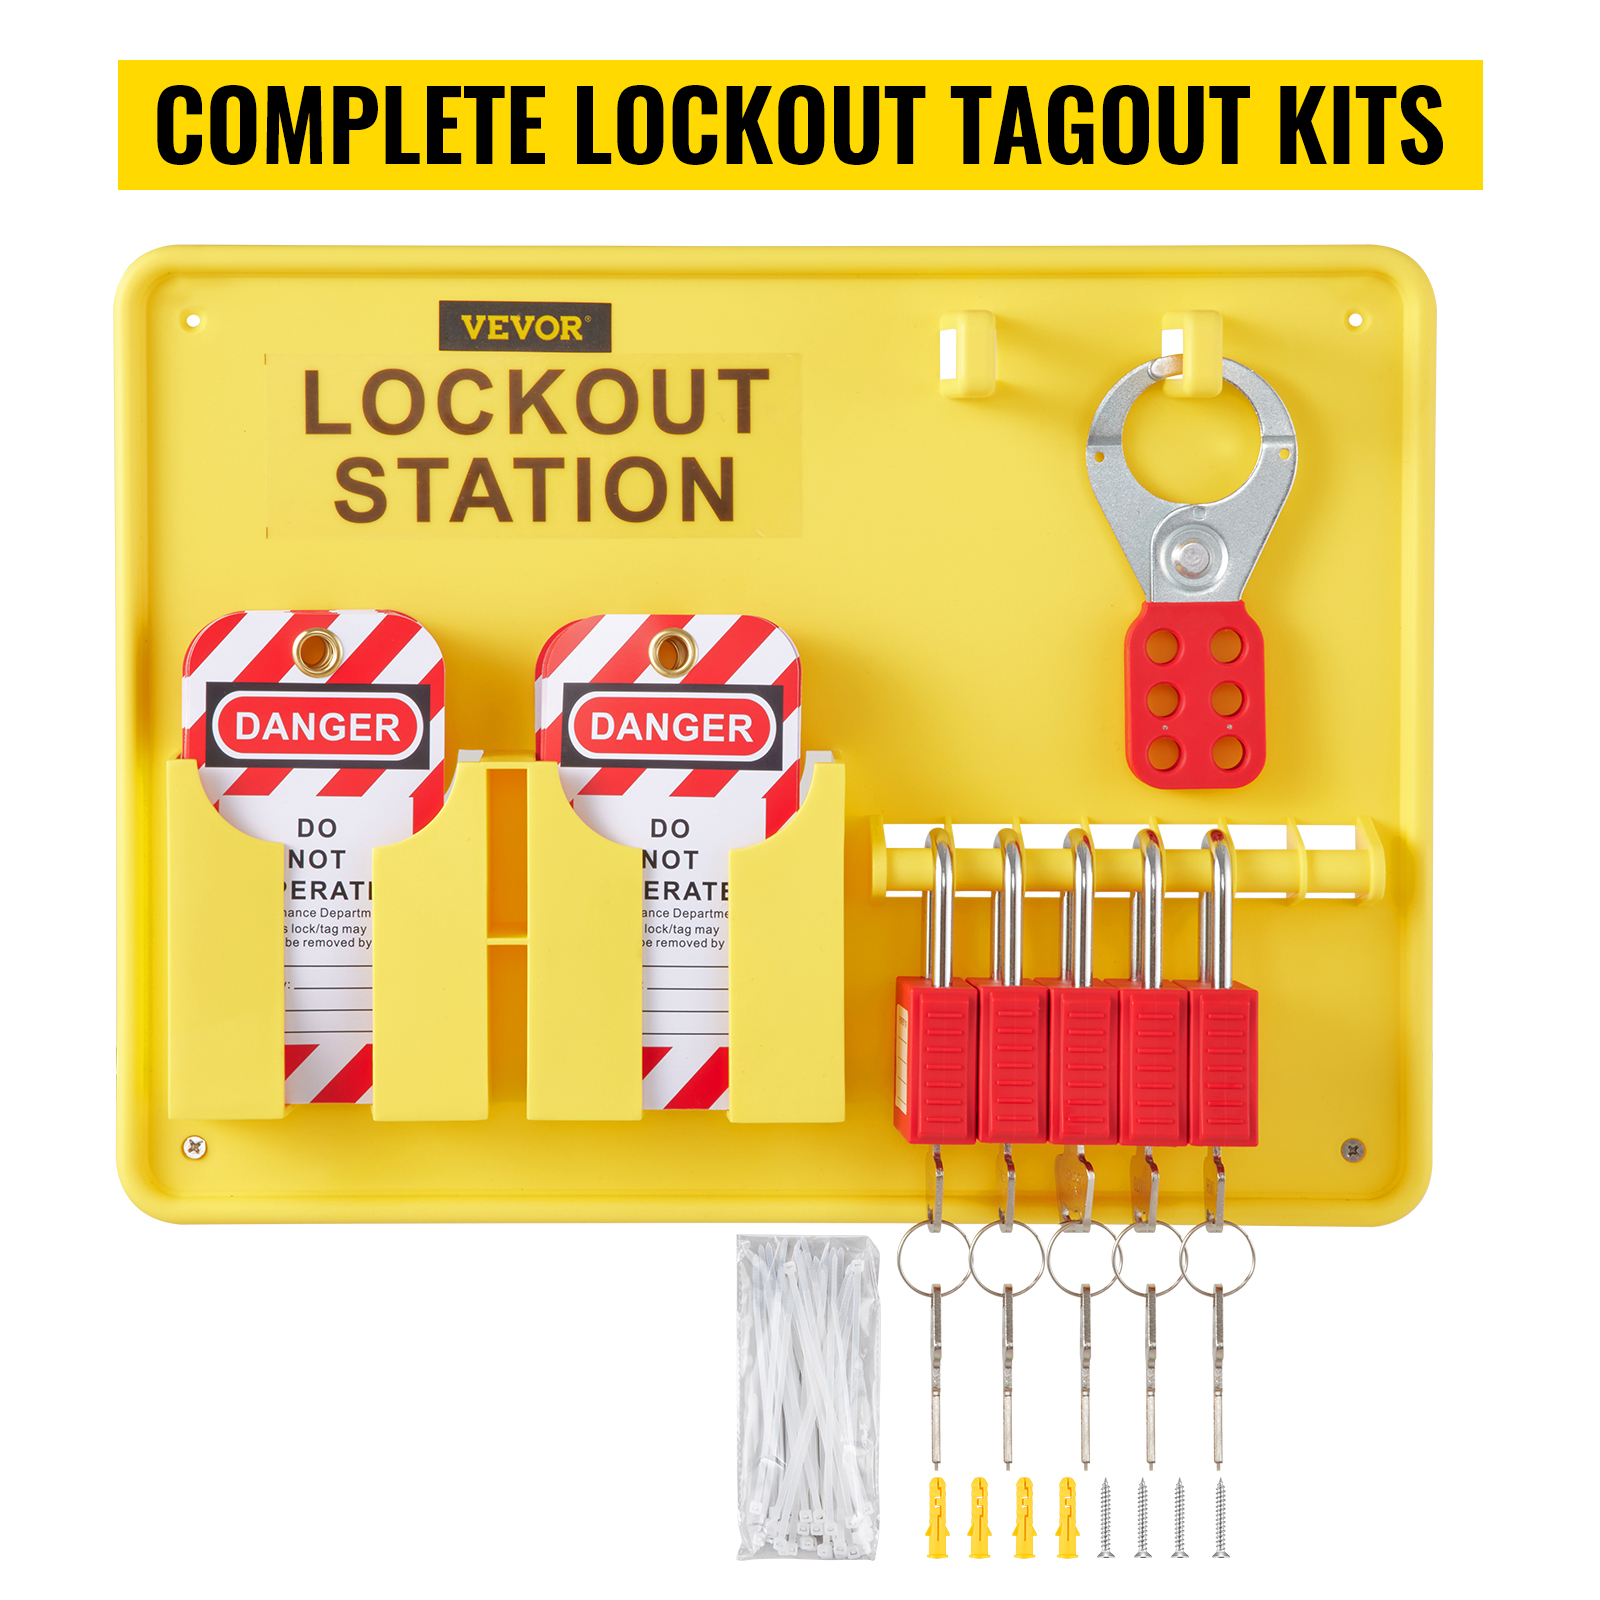 Lockout service monteur set - Lock out kit - LOTOTO kit - Loto kit